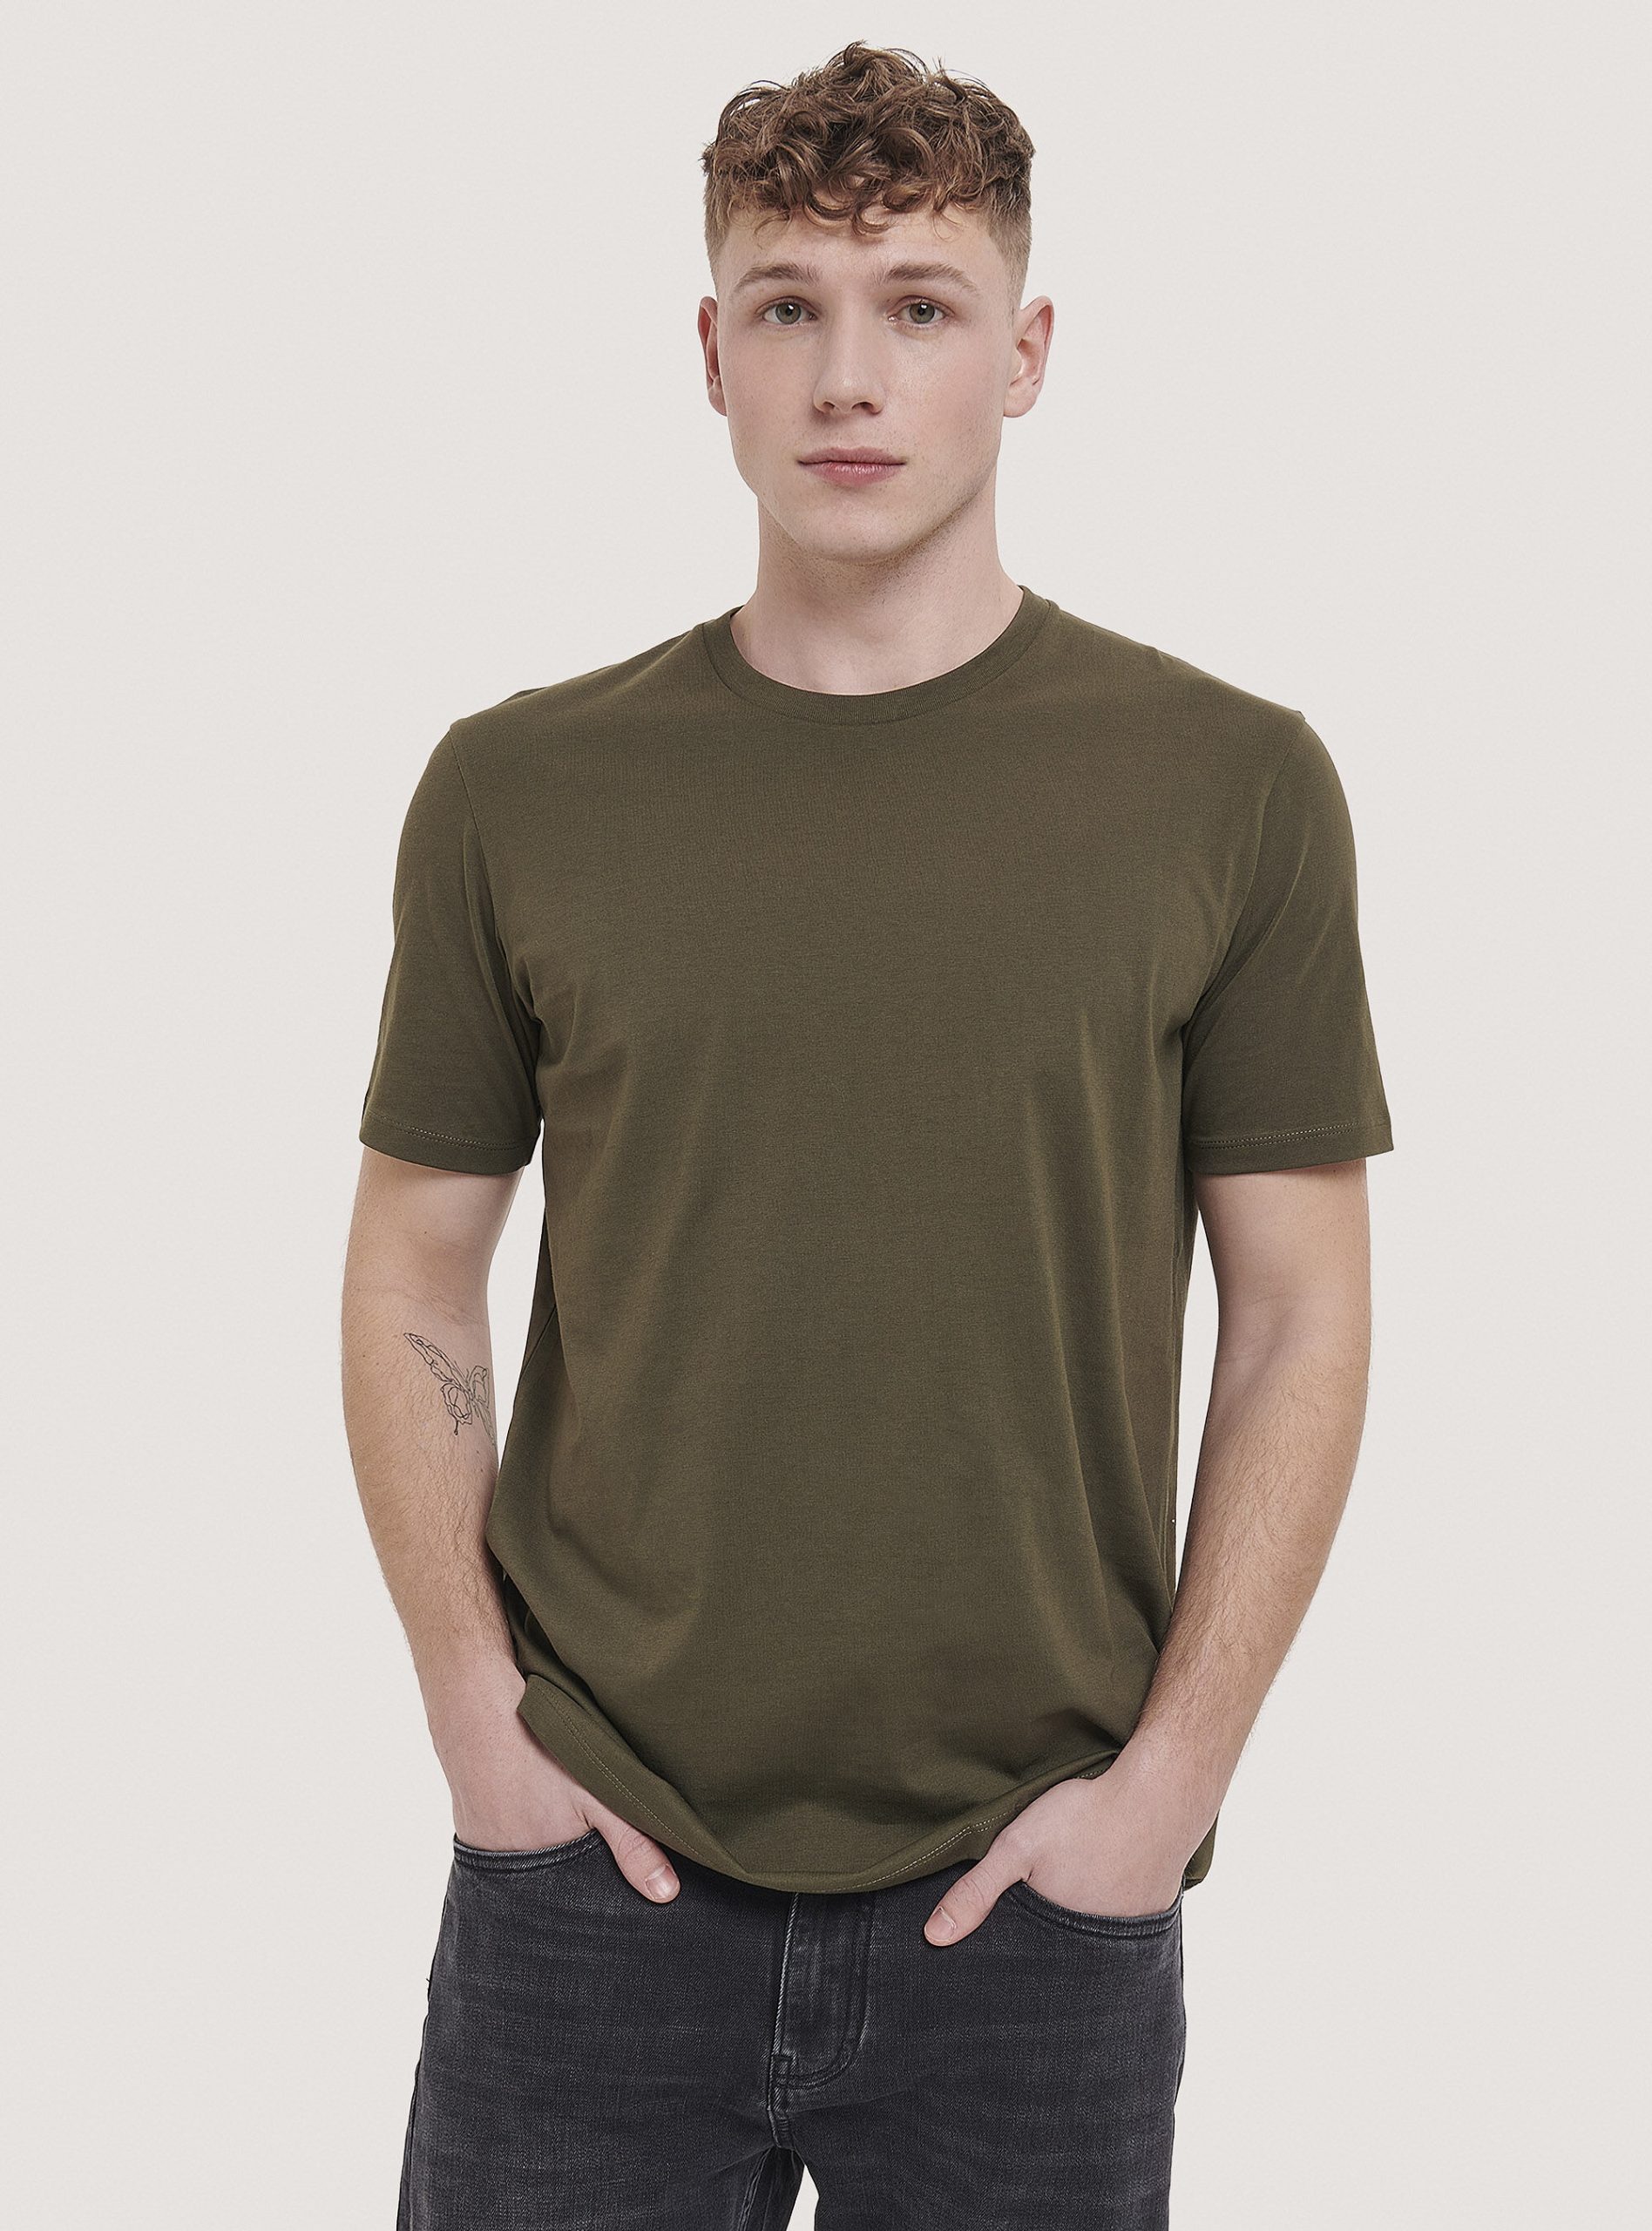 Billig Alcott Basic Cotton T-Shirt Männer C5587 Kaky T-Shirts – 1